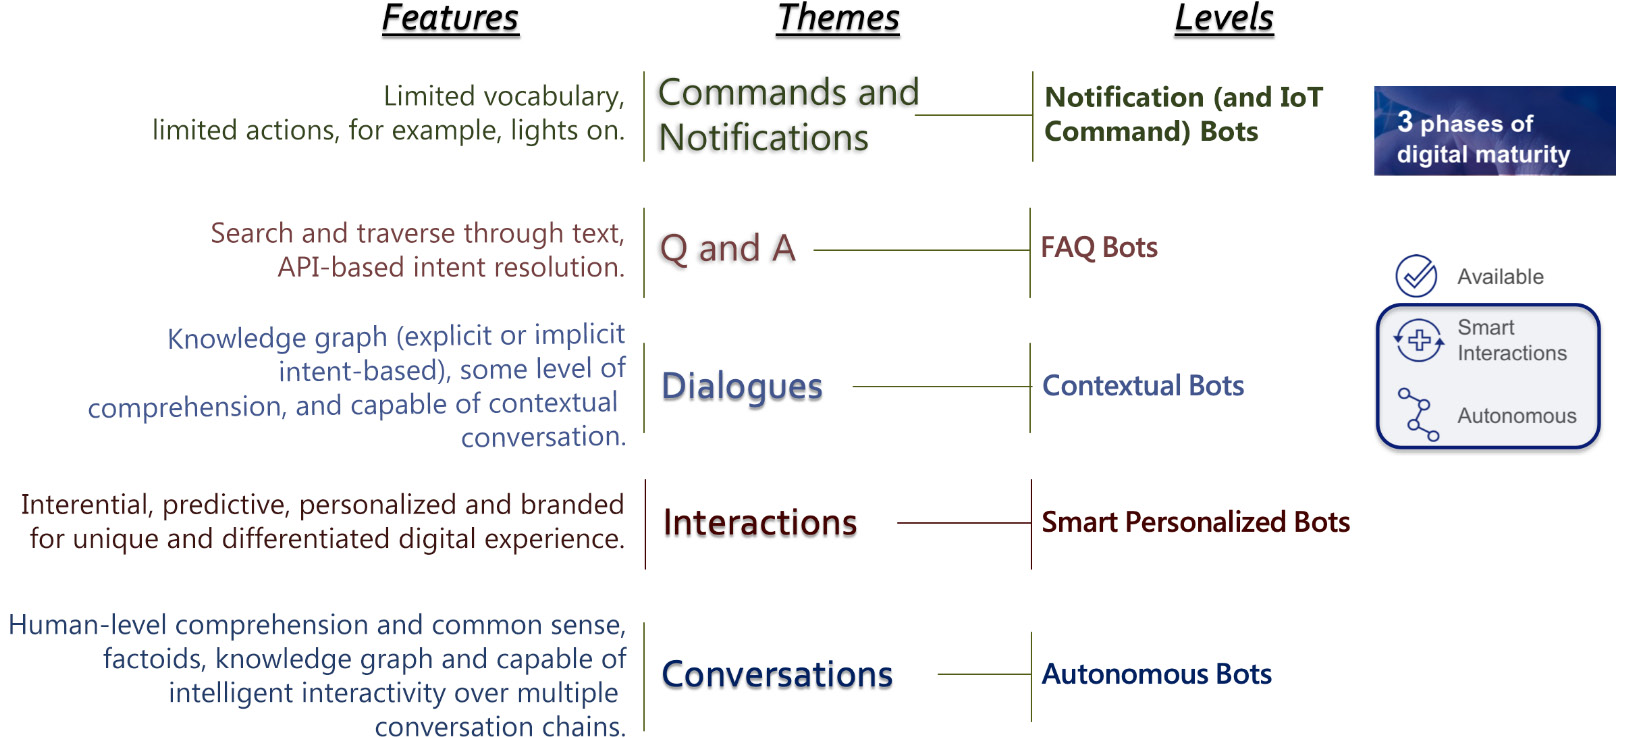 Figure 4.2: Levels of conversational AI 
